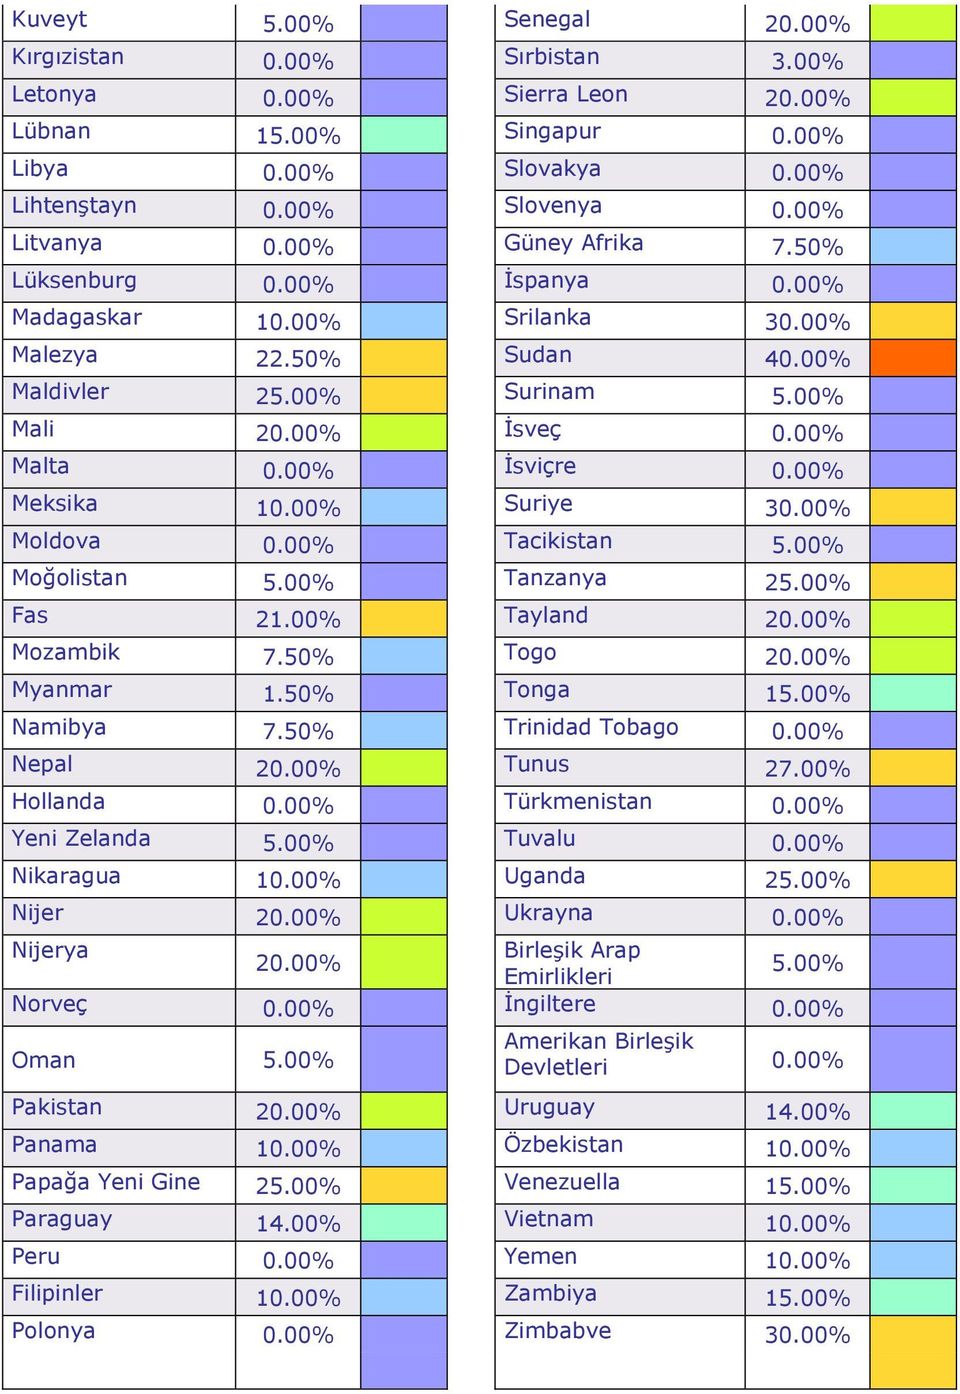 00% Meksika 10.00% Suriye 30.00% Moldova 0.00% Tacikistan 5.00% Moğolistan 5.00% Tanzanya 25.00% Fas 21.00% Tayland 20.00% Mozambik 7.50% Togo 20.00% Myanmar 1.50% Tonga 15.00% Namibya 7.